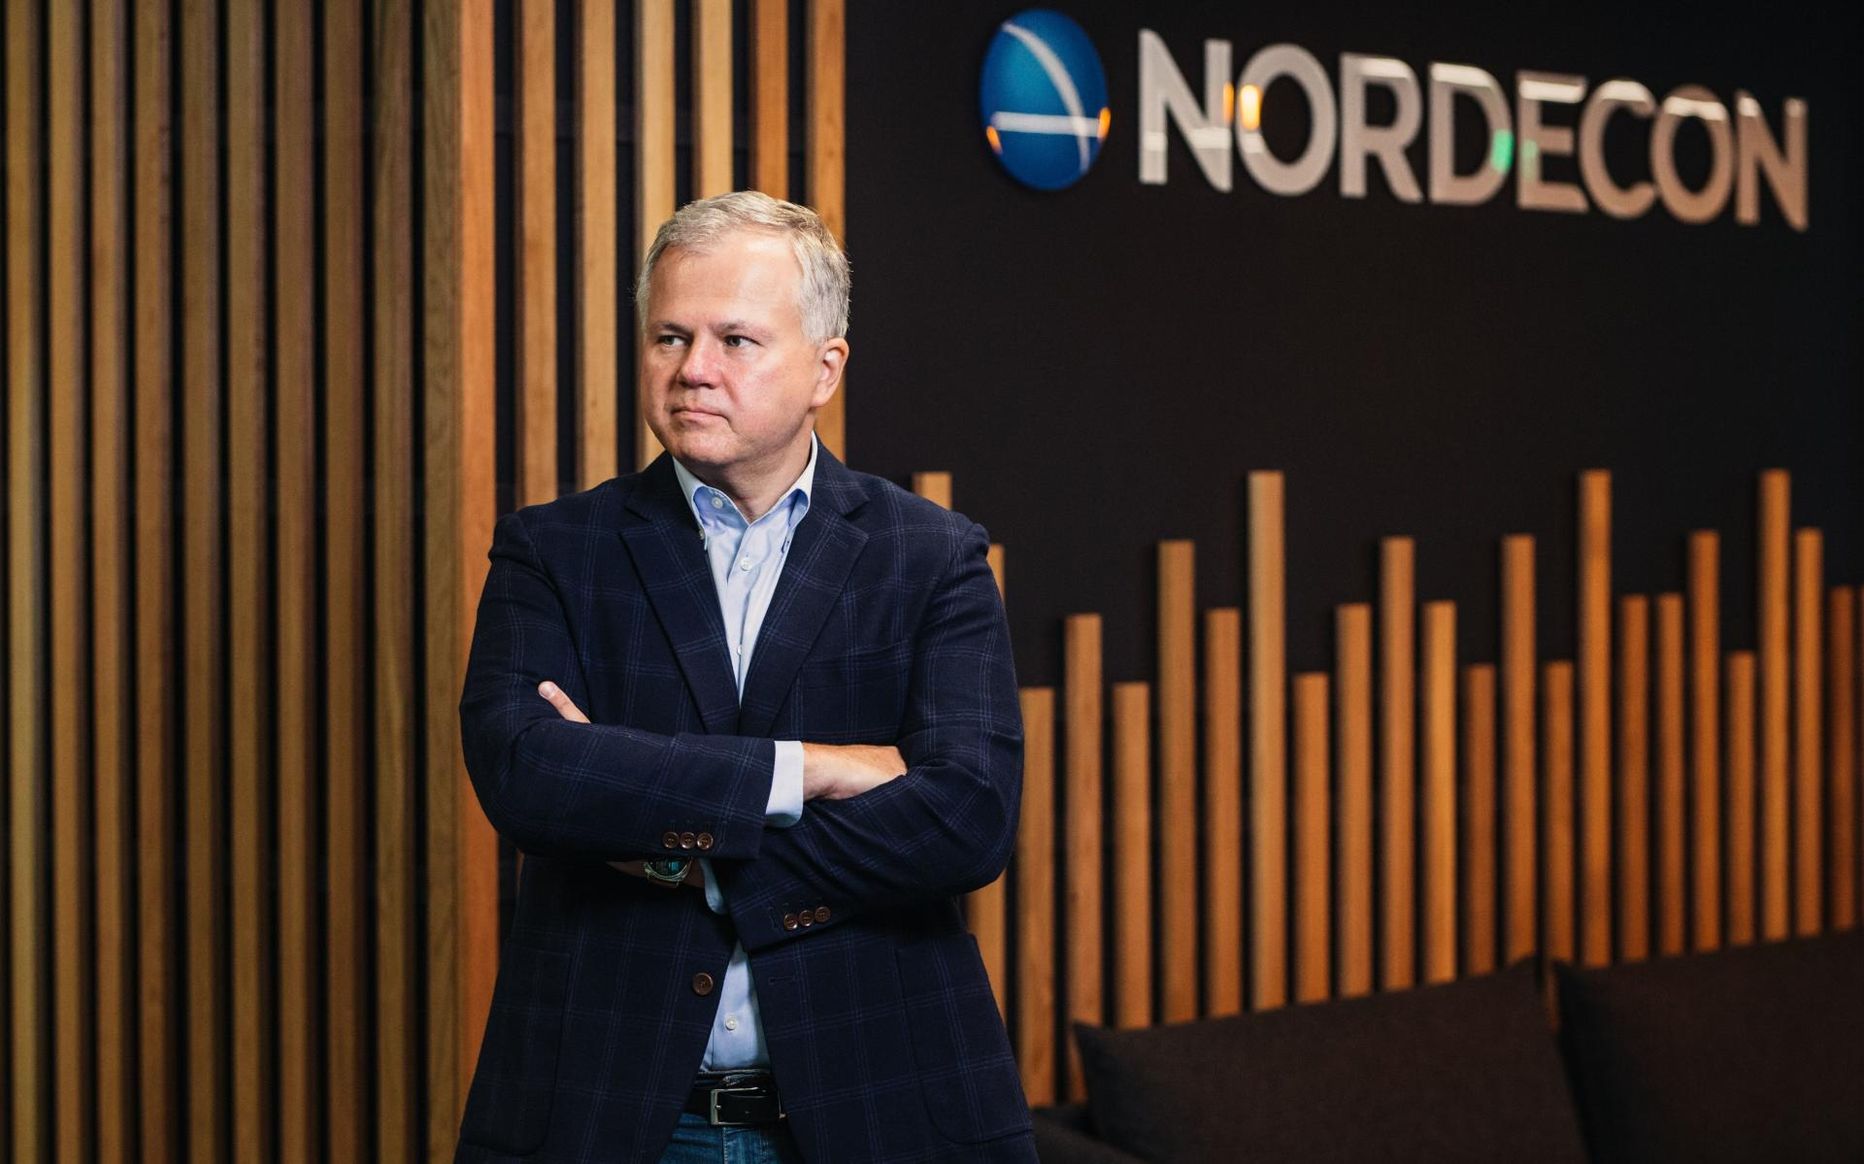 Nordeconi juht Gerd Müller